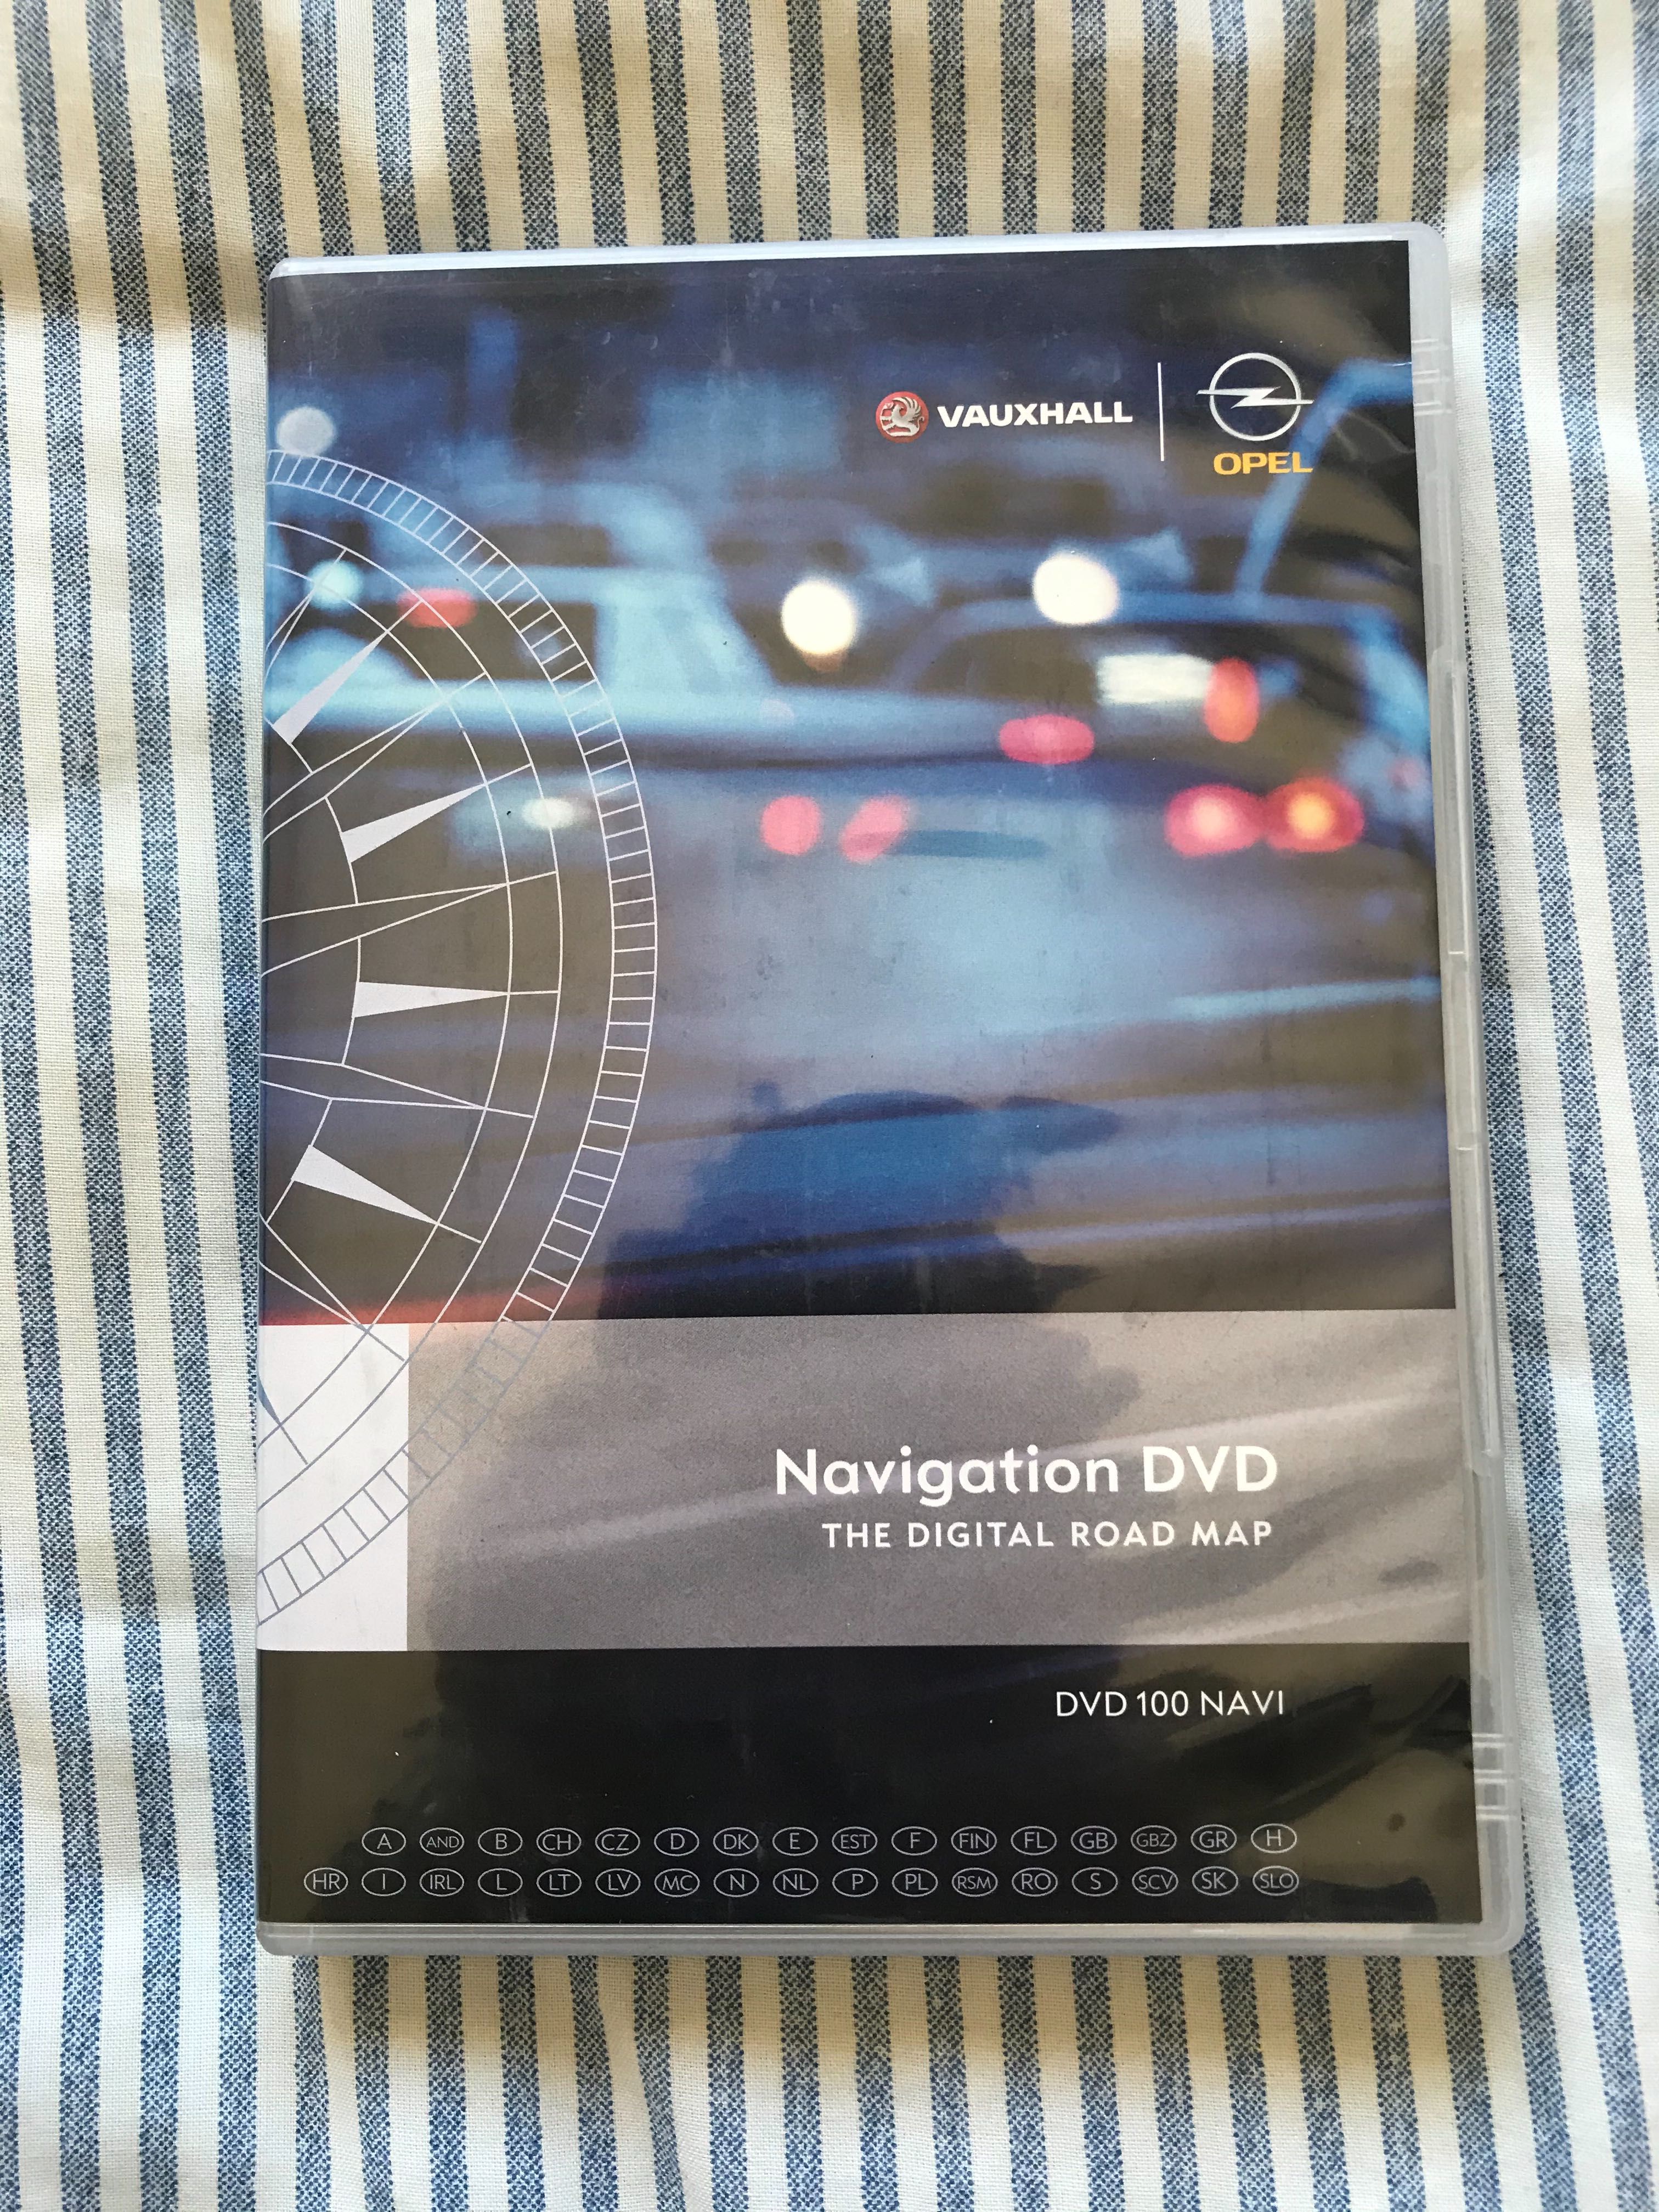 Opel DVD 100 Navi - Mapas e CD de software